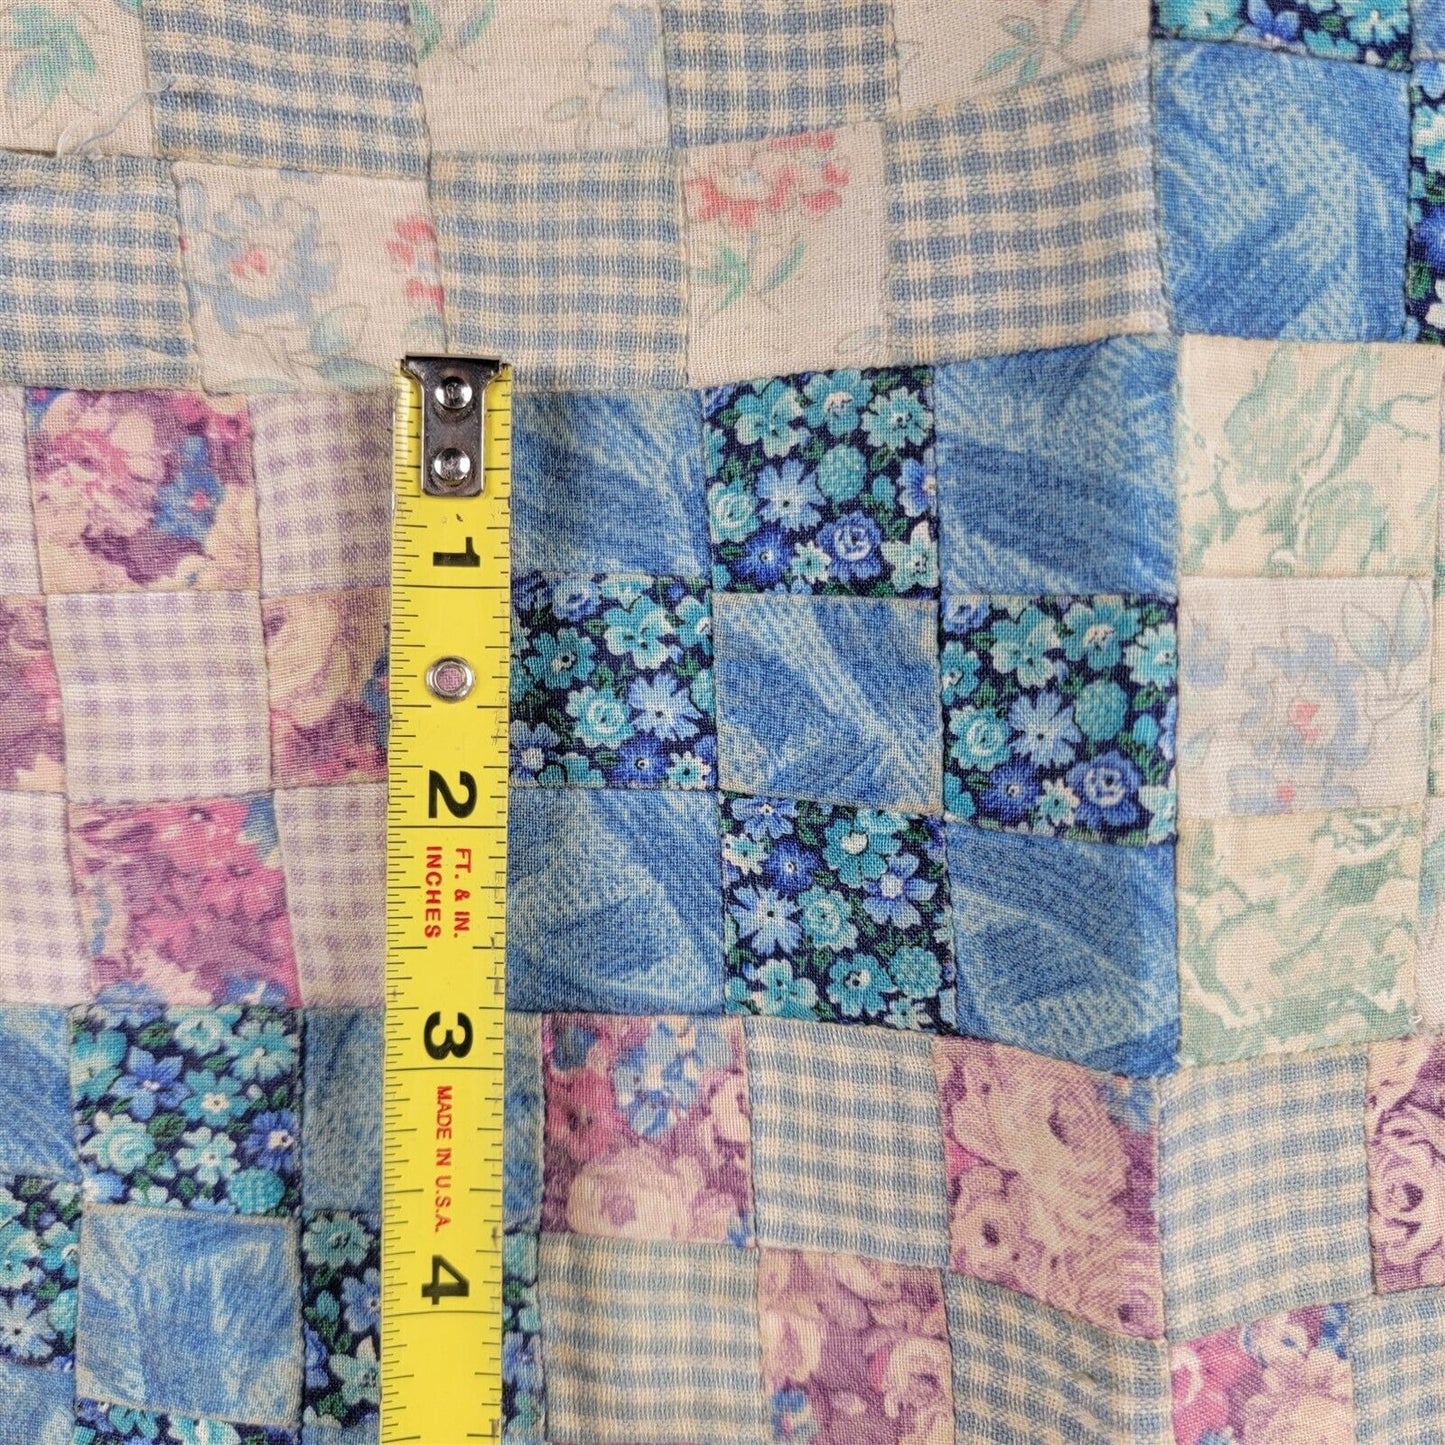 Vintage Quilt Pink Blue Patchwork 1x1 Blocks 81x63 4500+ Squares - Needs Repair